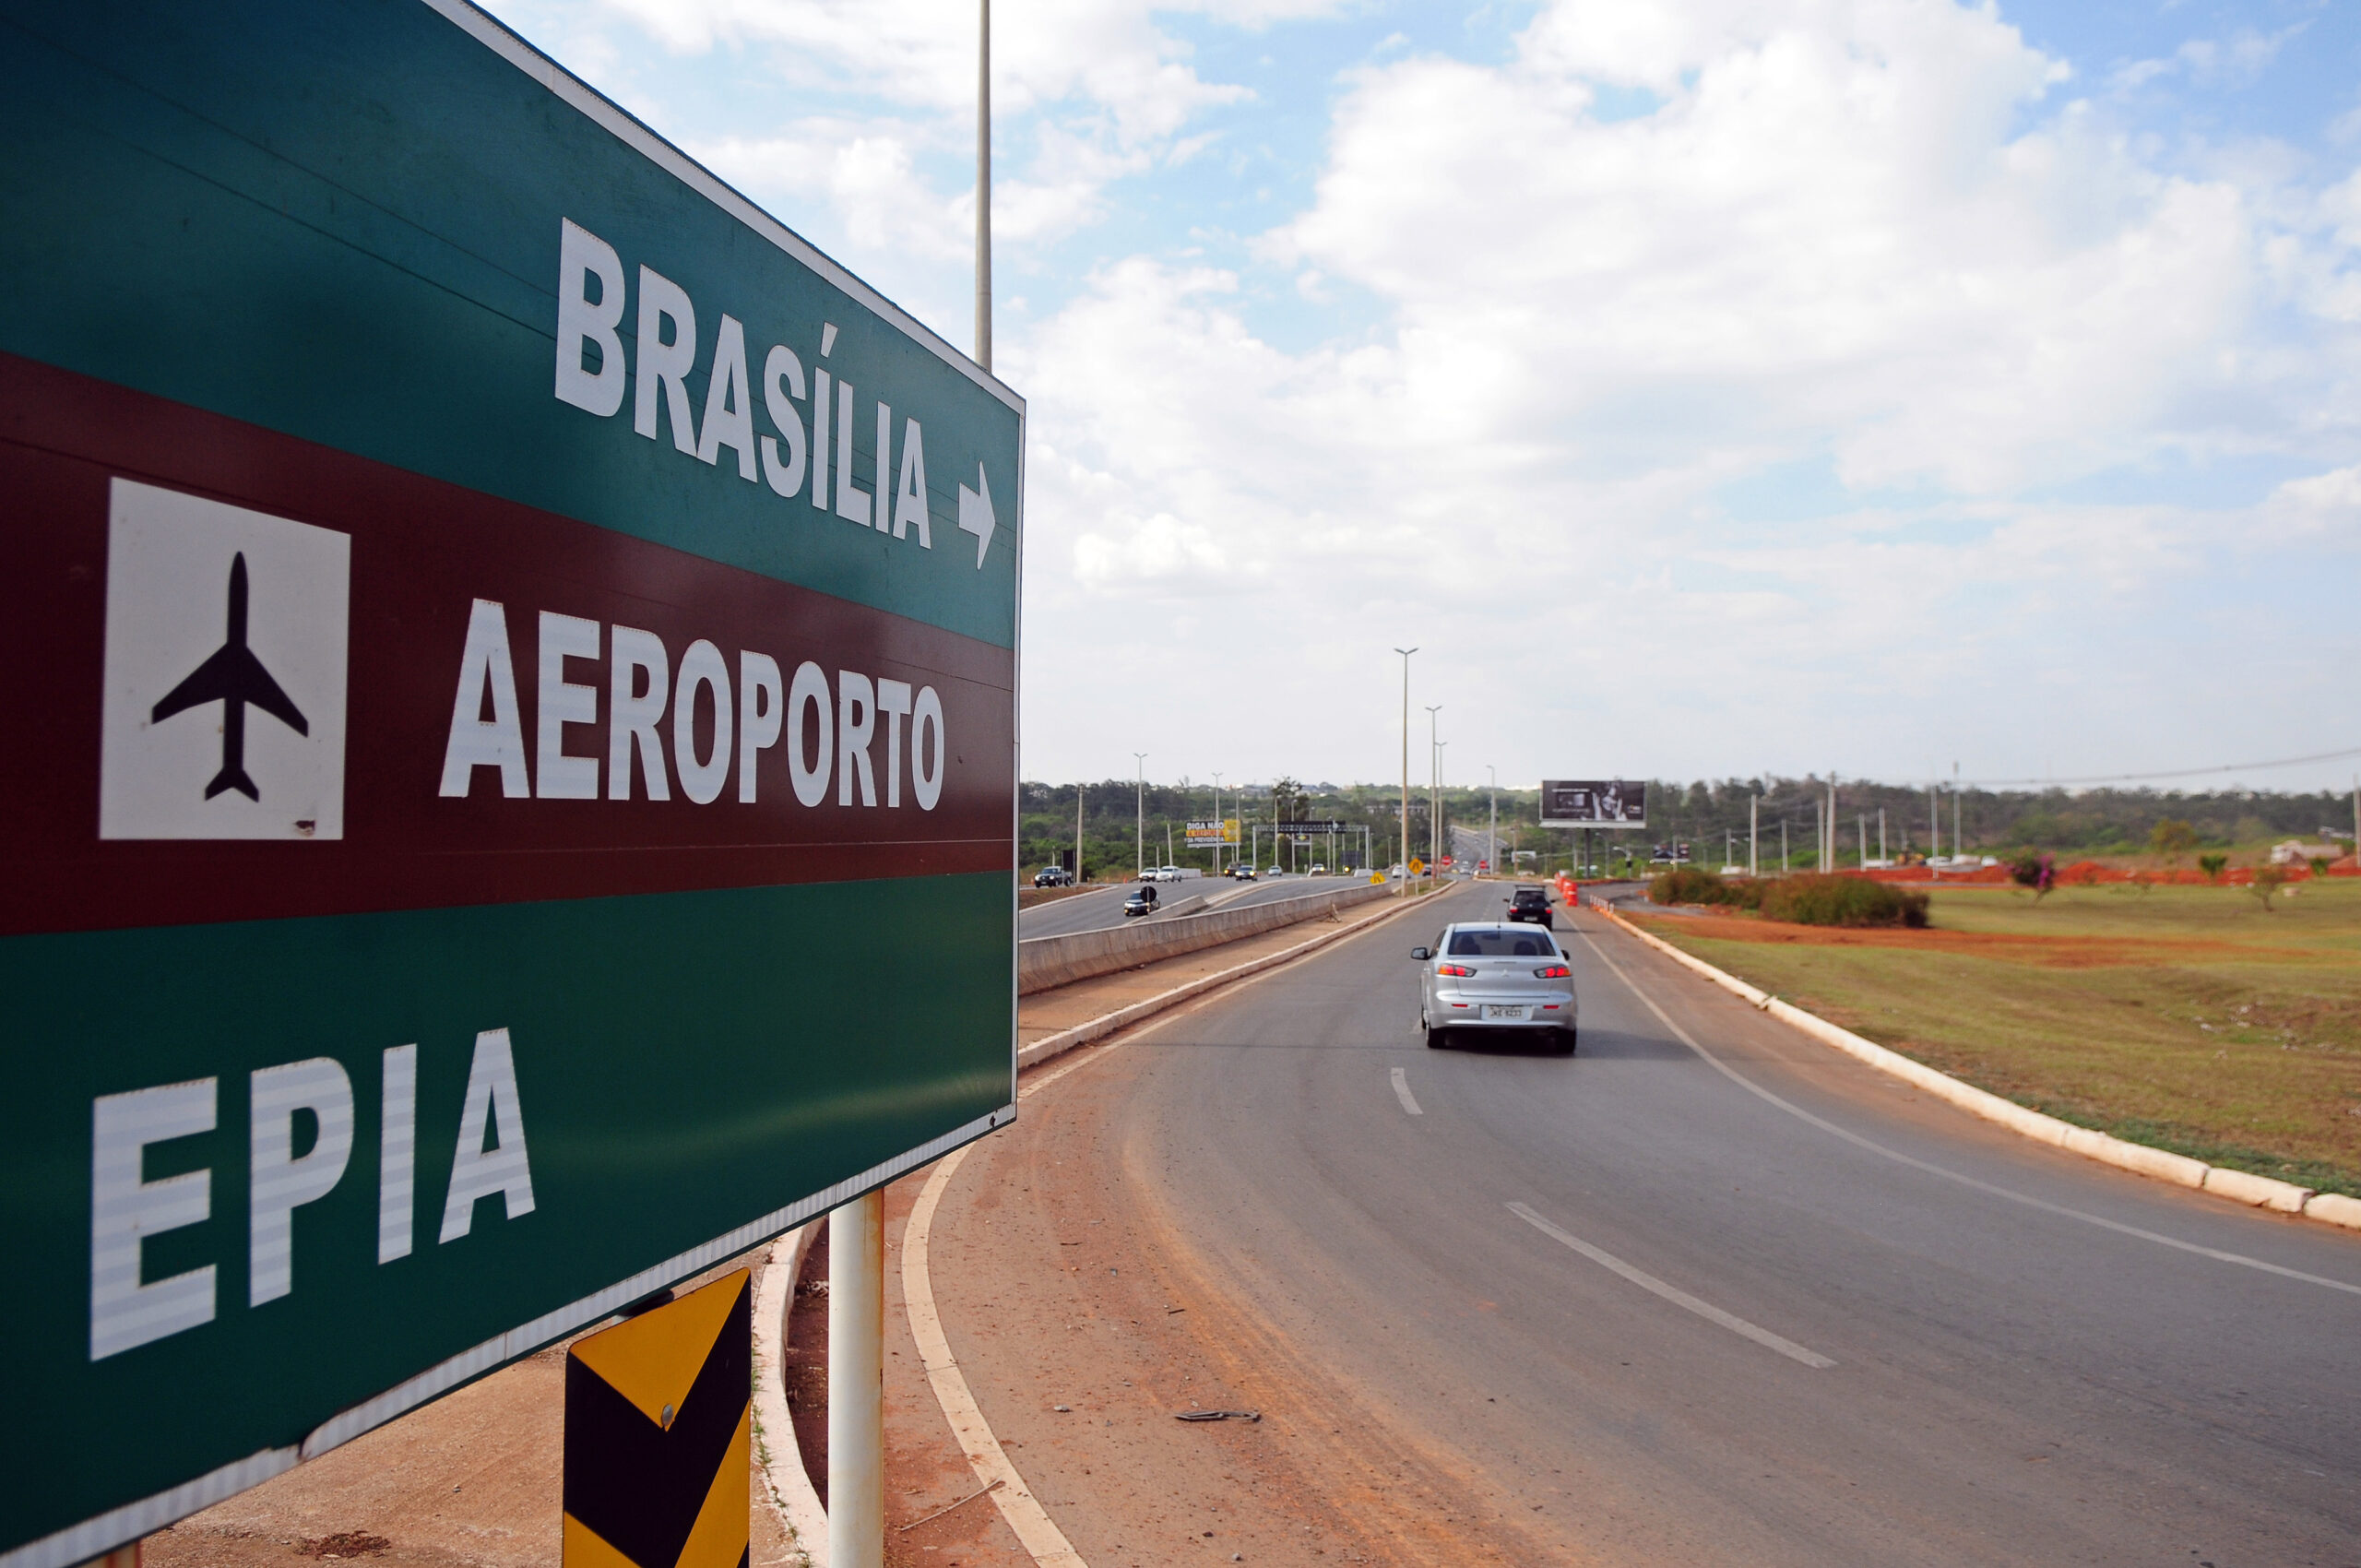 Foto-Arquivo-Agencia-Brasilia-2-scaled-1.jpg